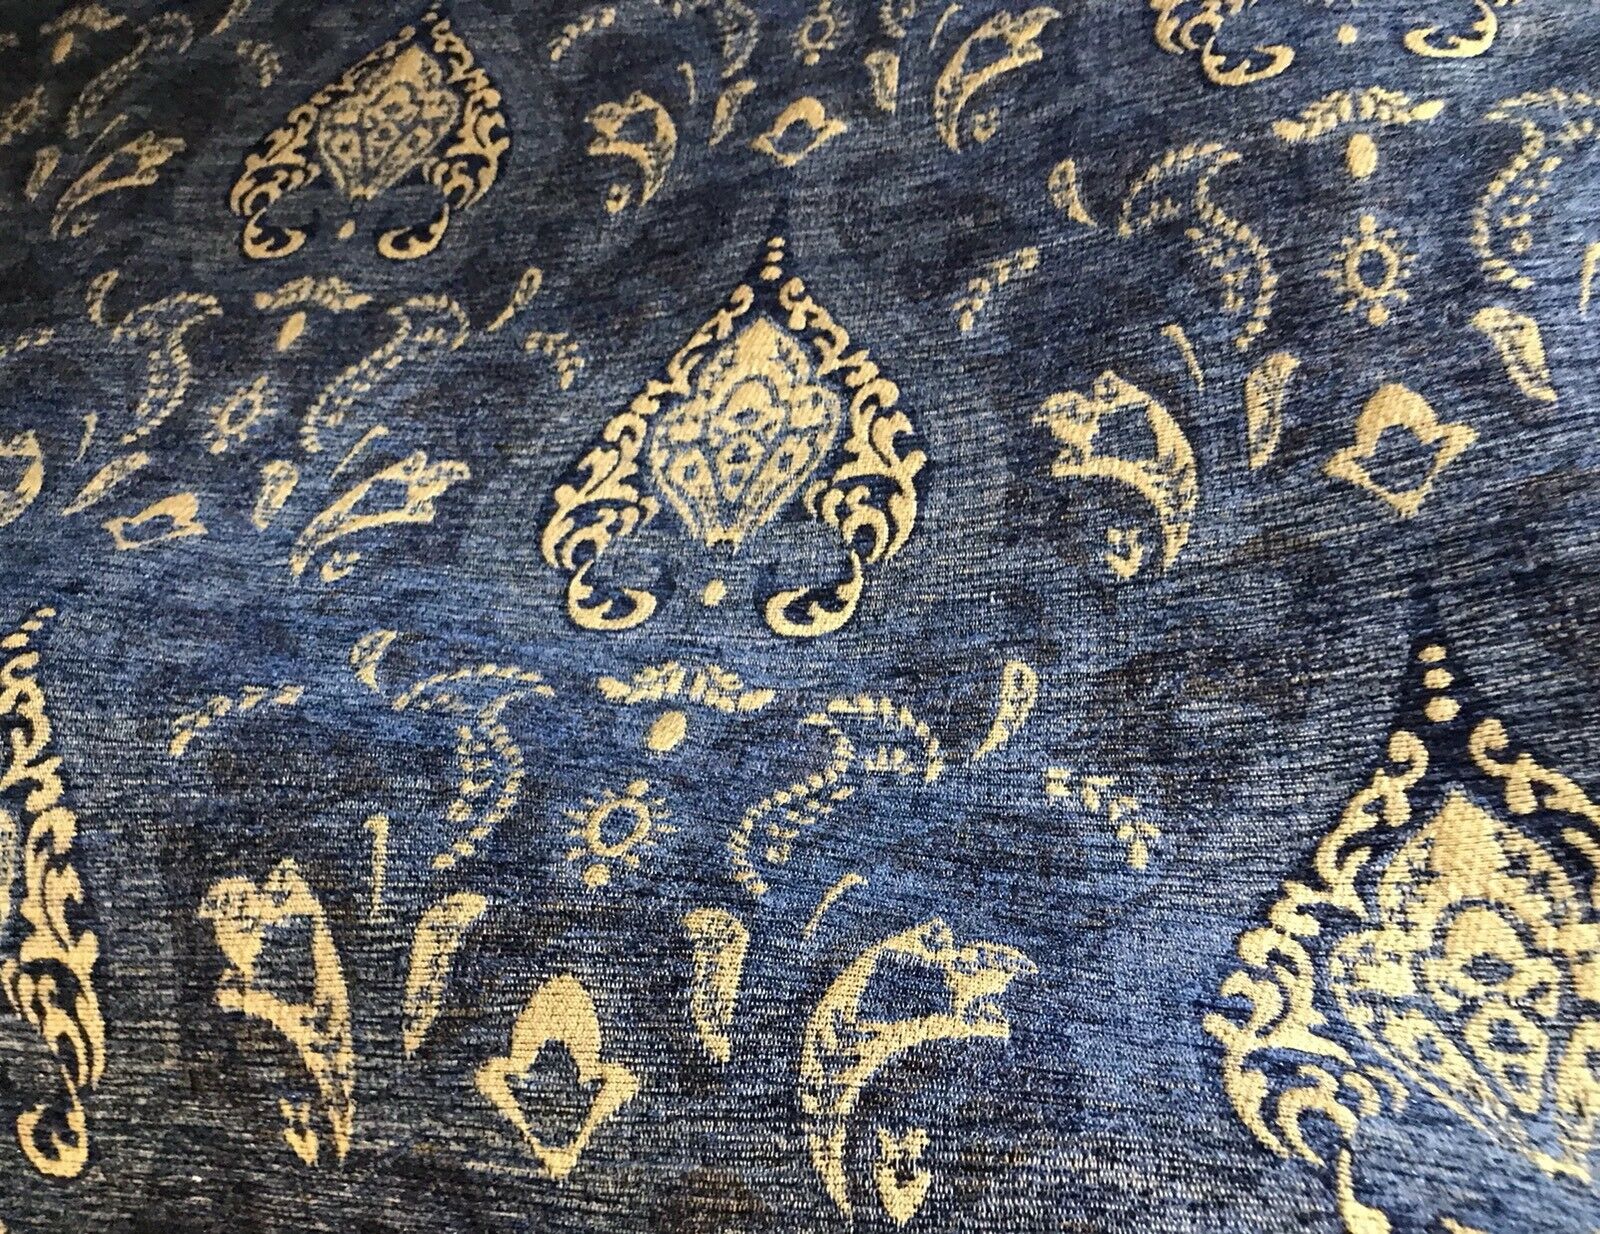 SALE! Designer Upholstery Chenille Velvet Fabric - Blue Gold LLPCB001 | www.fancystylesfabric.com